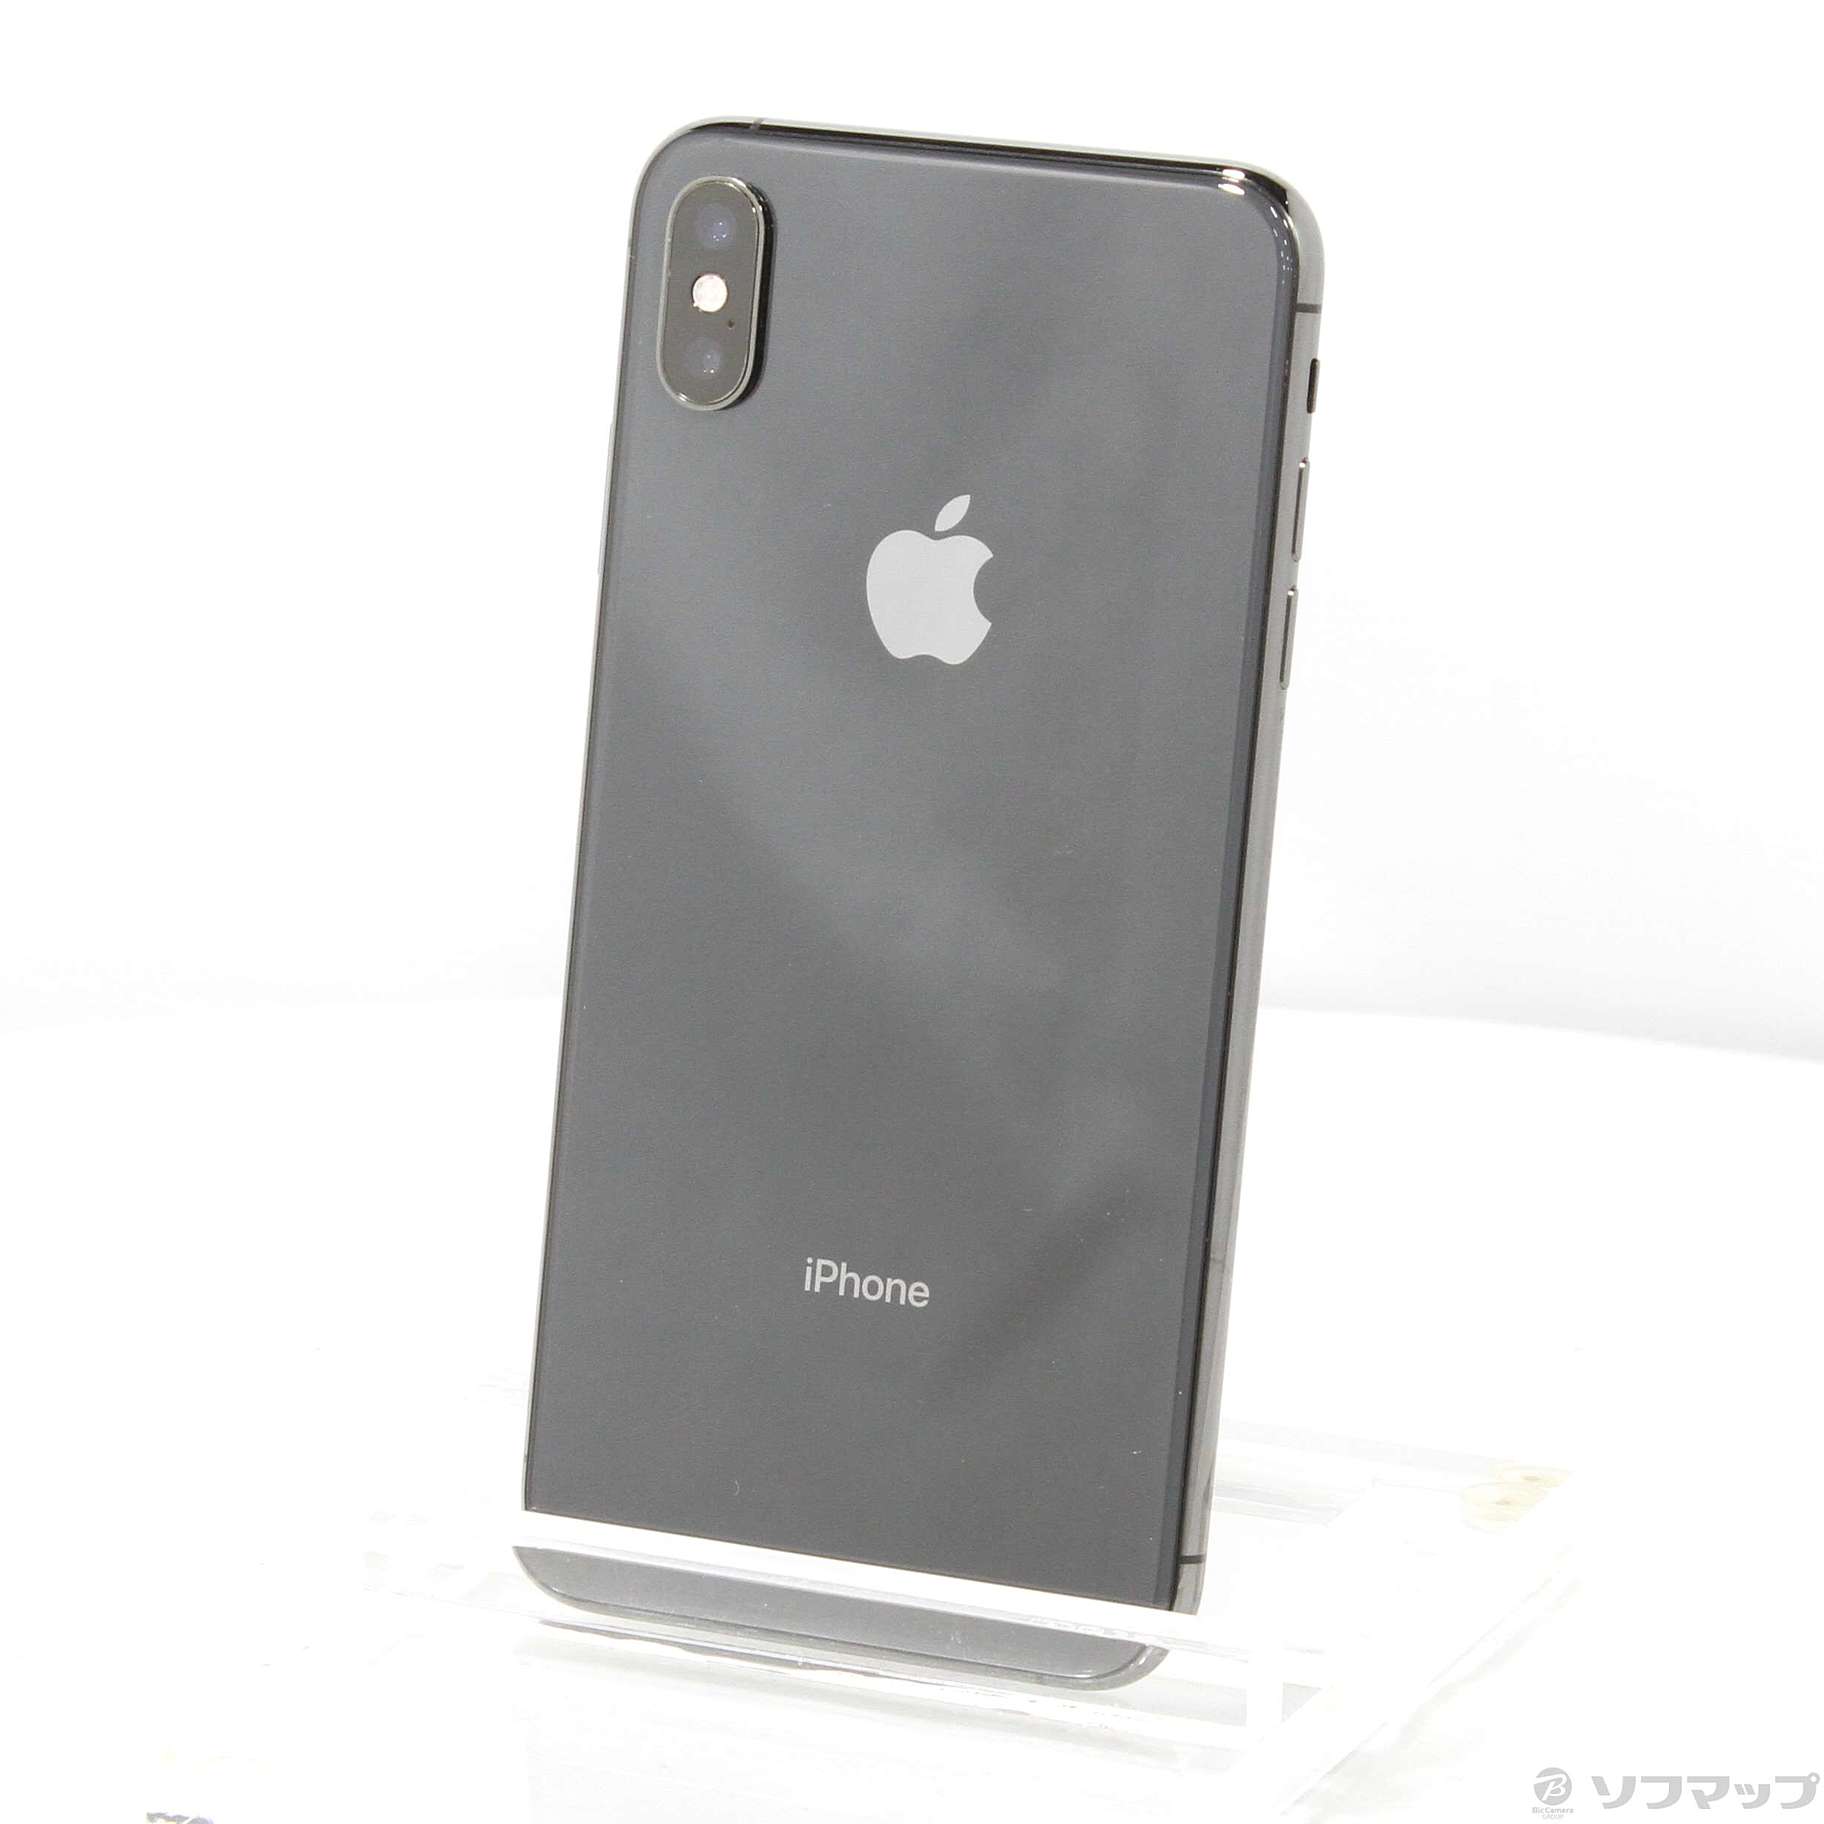 iPhoneXs 256gb spacegray/スペースグレースマートフォン本体